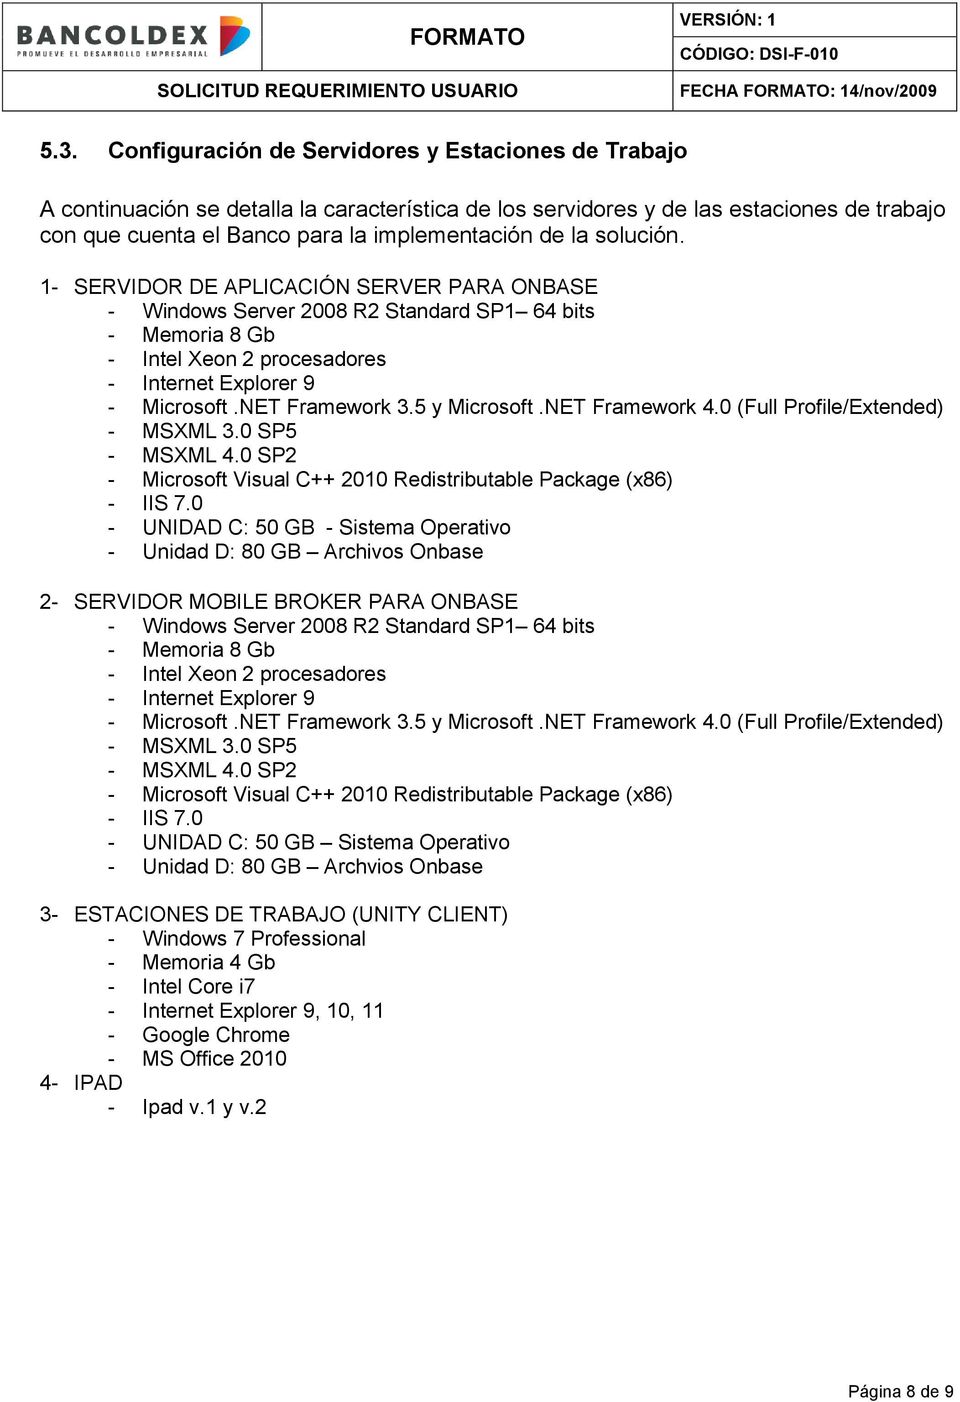 5 y Microsoft.NET Framework 4.0 (Full Profile/Extended) - MSXML 3.0 SP5 - MSXML 4.0 SP2 - Microsoft Visual C++ 2010 Redistributable Package (x86) - IIS 7.